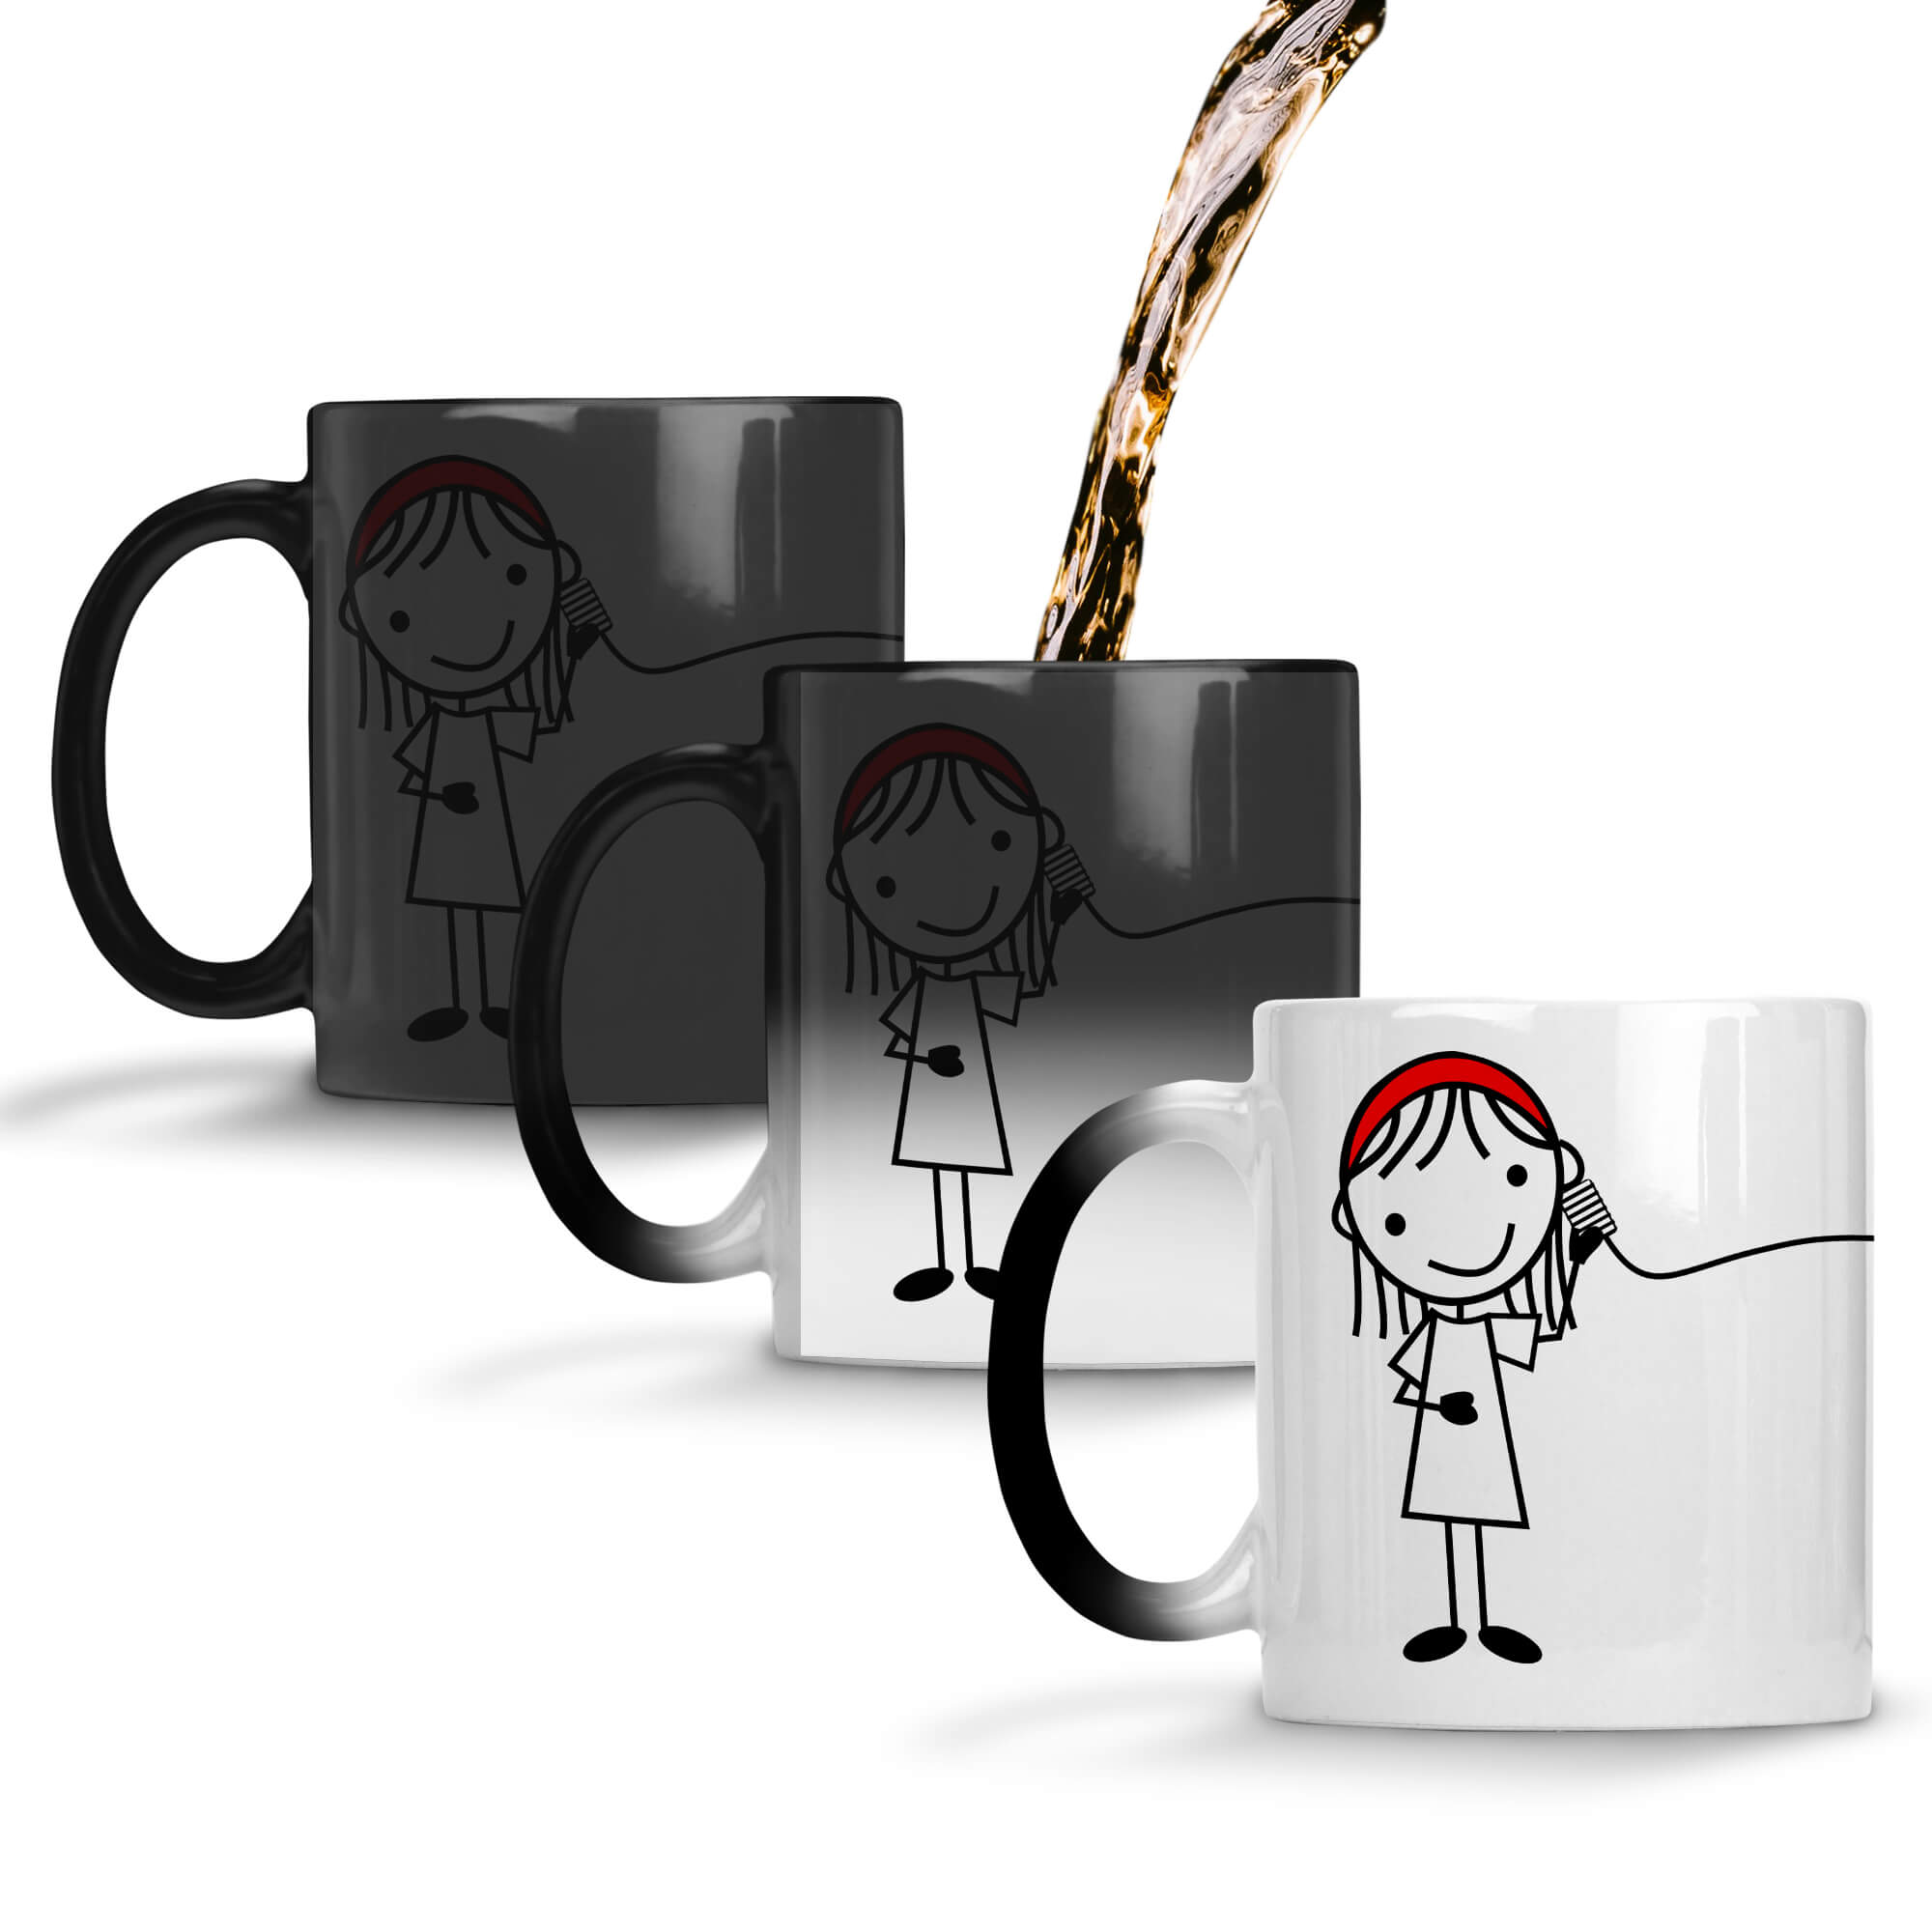 Connected Together Coffee Mug Magic